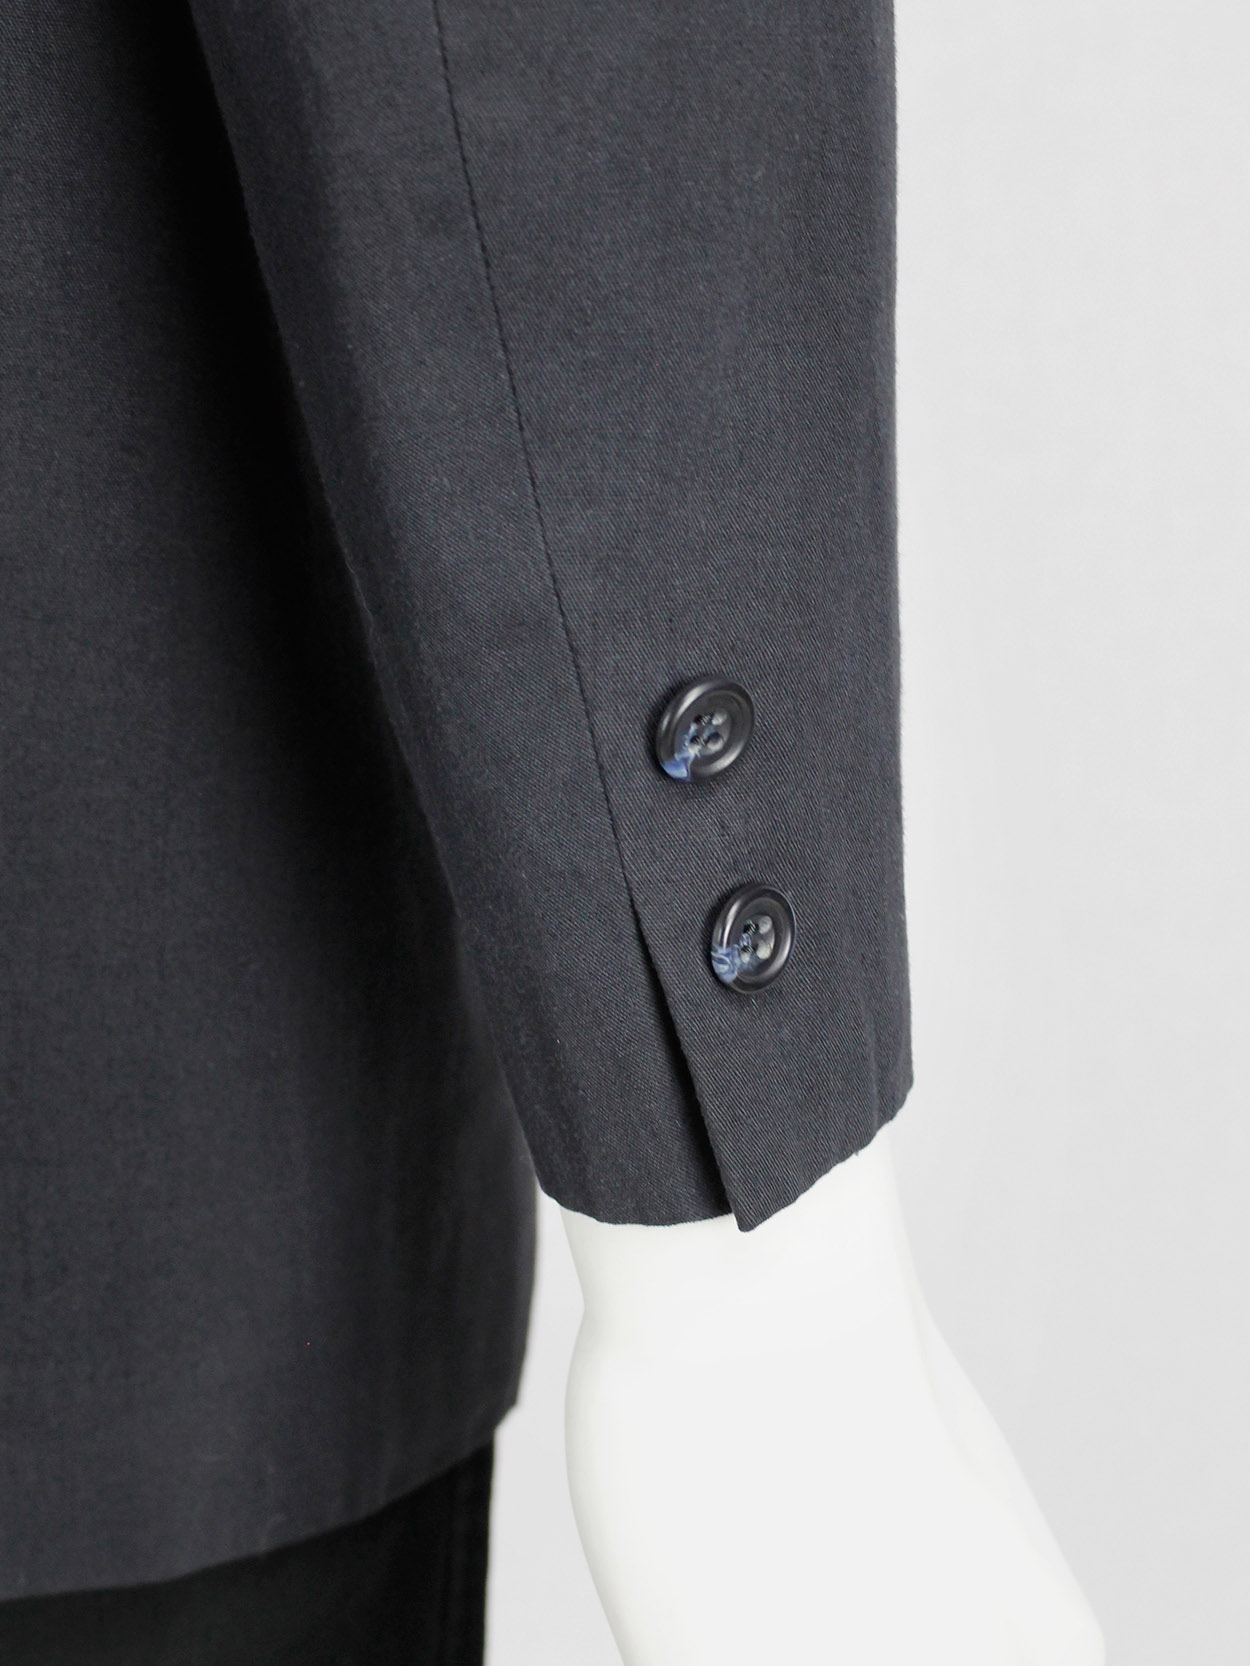 Comme des Garçons Homme black minimalist blazer with two breast pockets ...